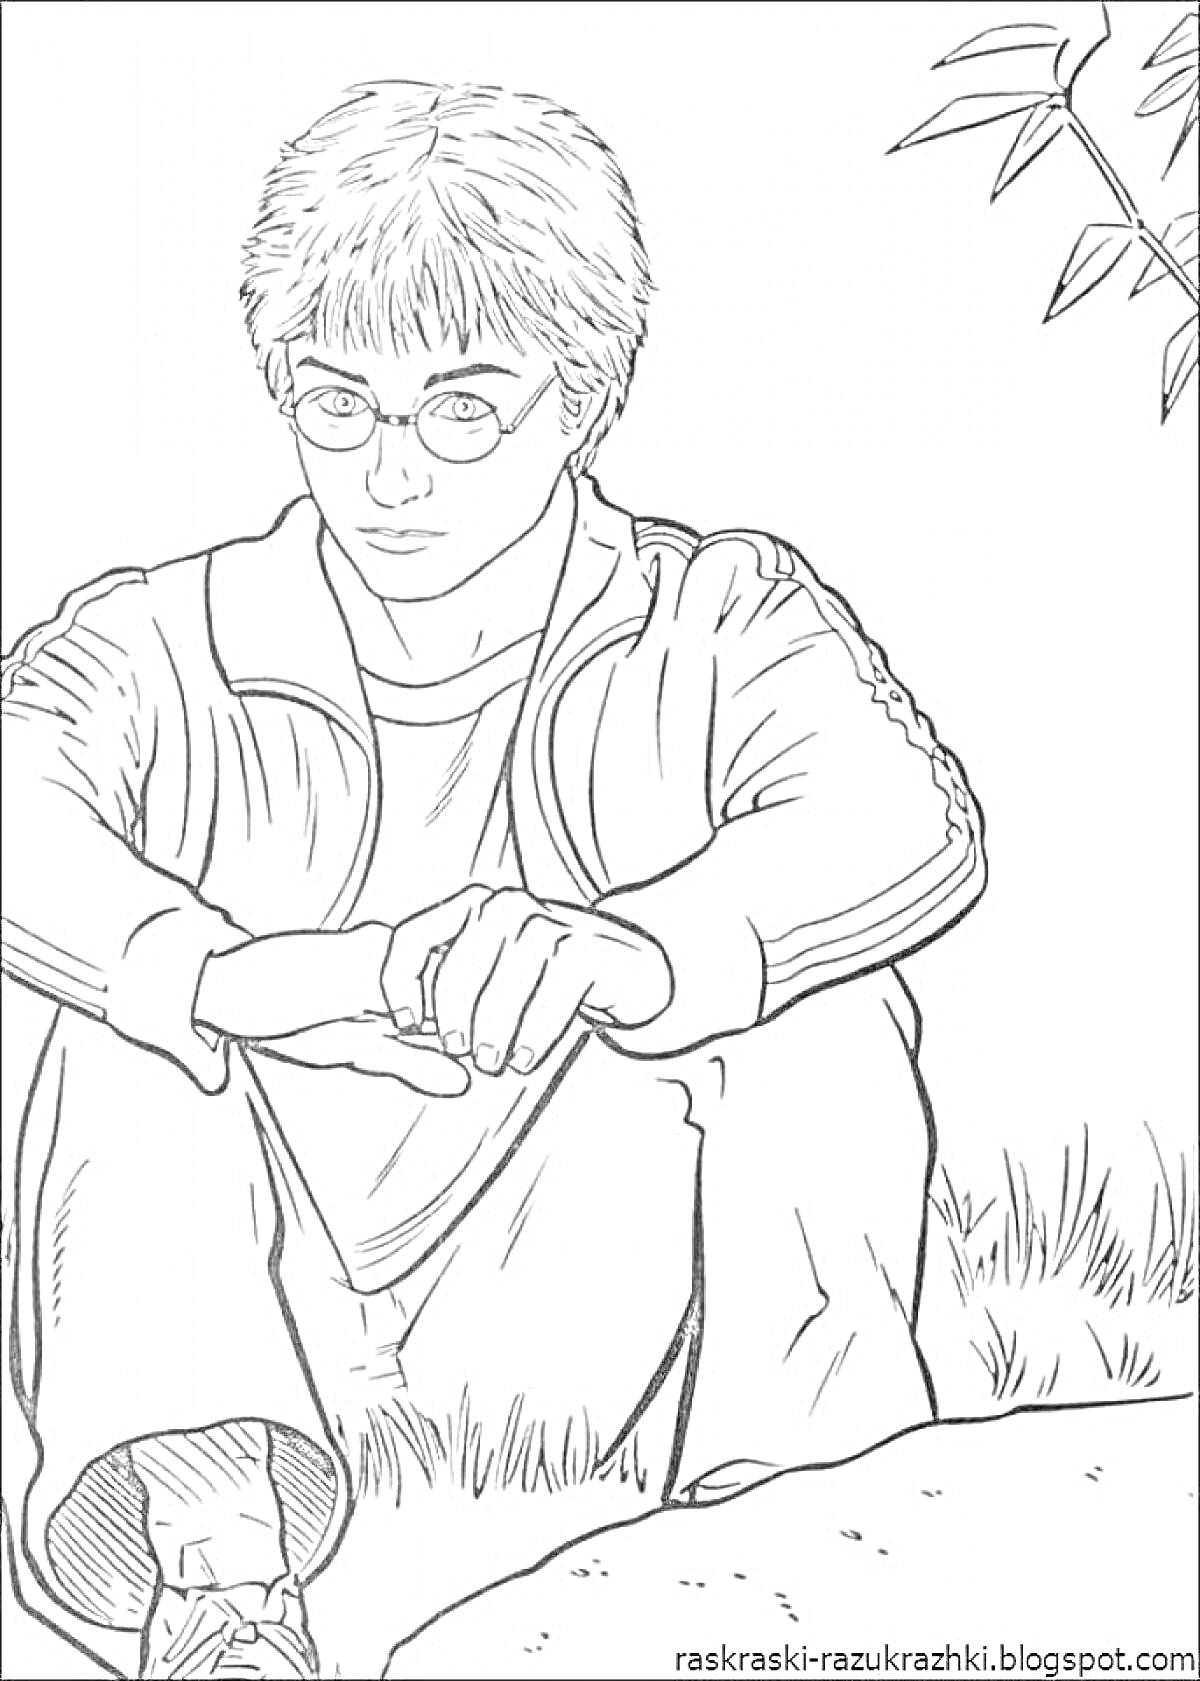 Раскраска Гарри Поттер сидит на траве, ветка дерева на фоне, камень возле ног